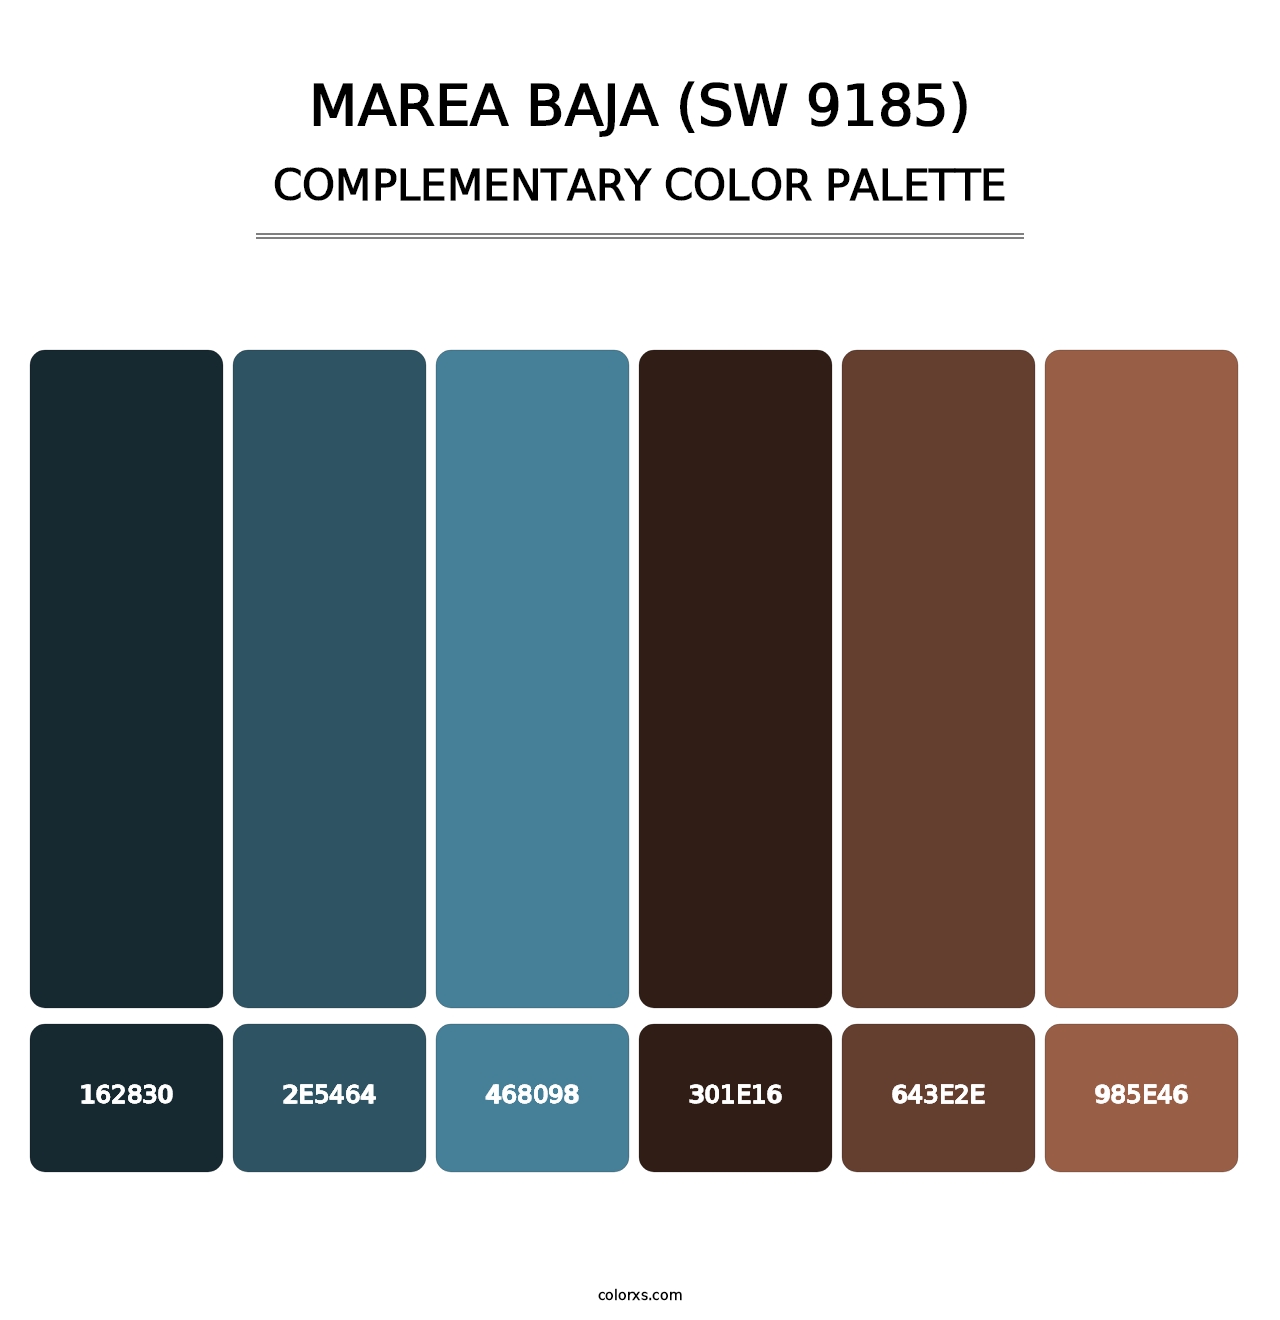 Marea Baja (SW 9185) - Complementary Color Palette